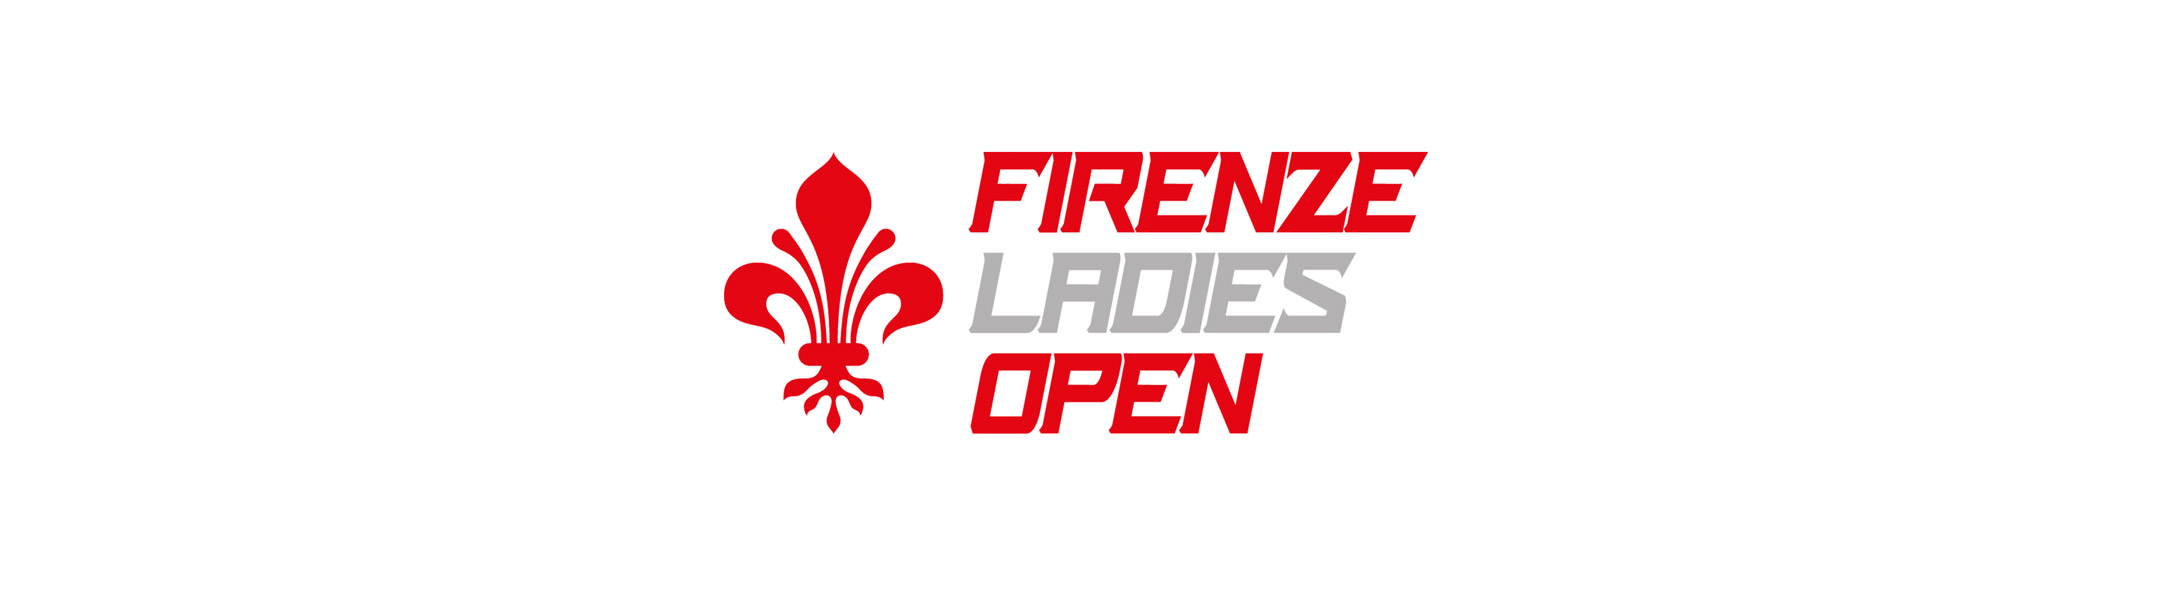 Firenze Ladies Open